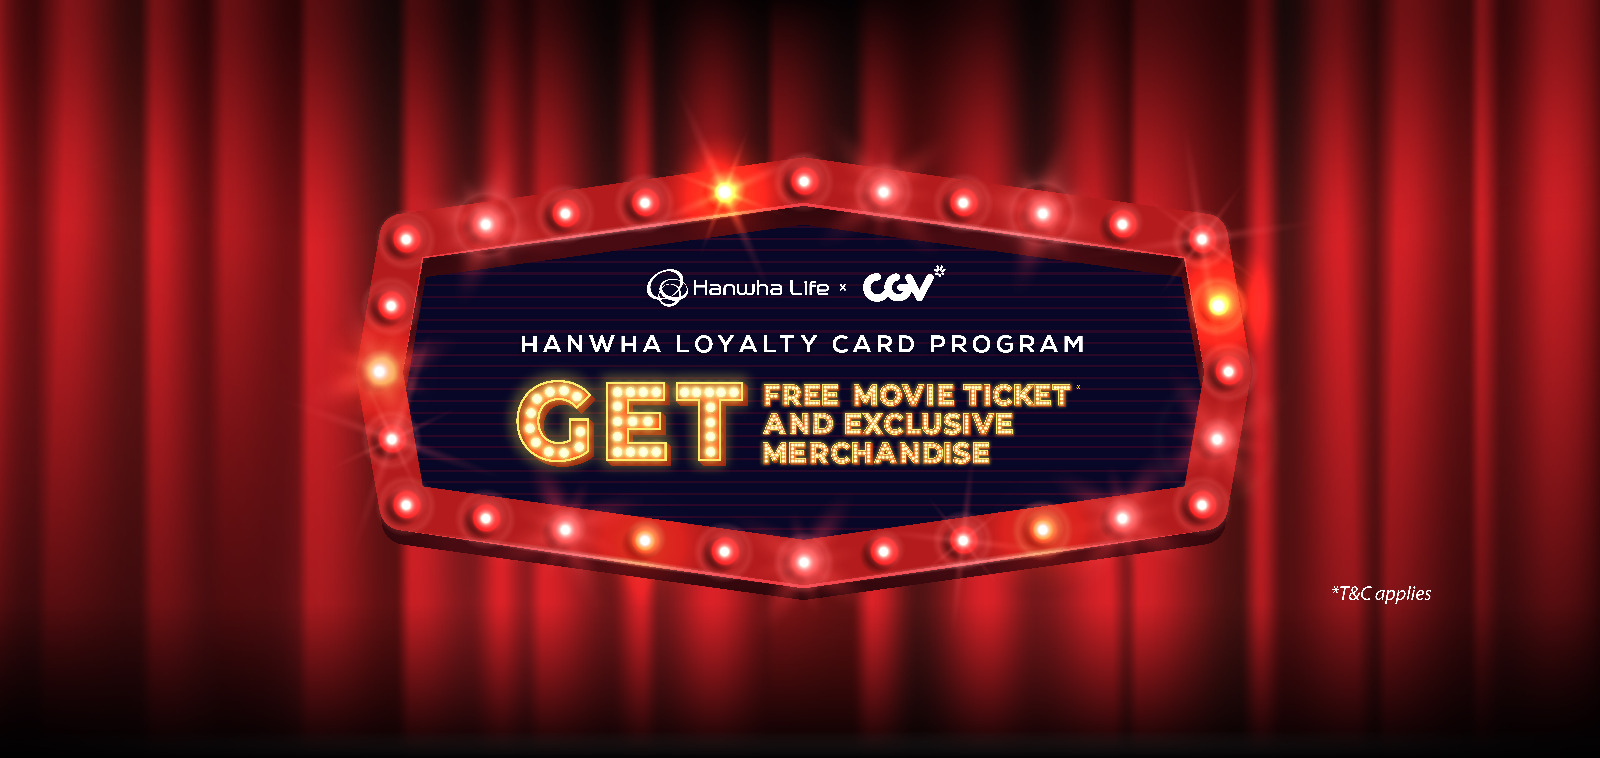 CGV Hanwha Loyalty Card Program